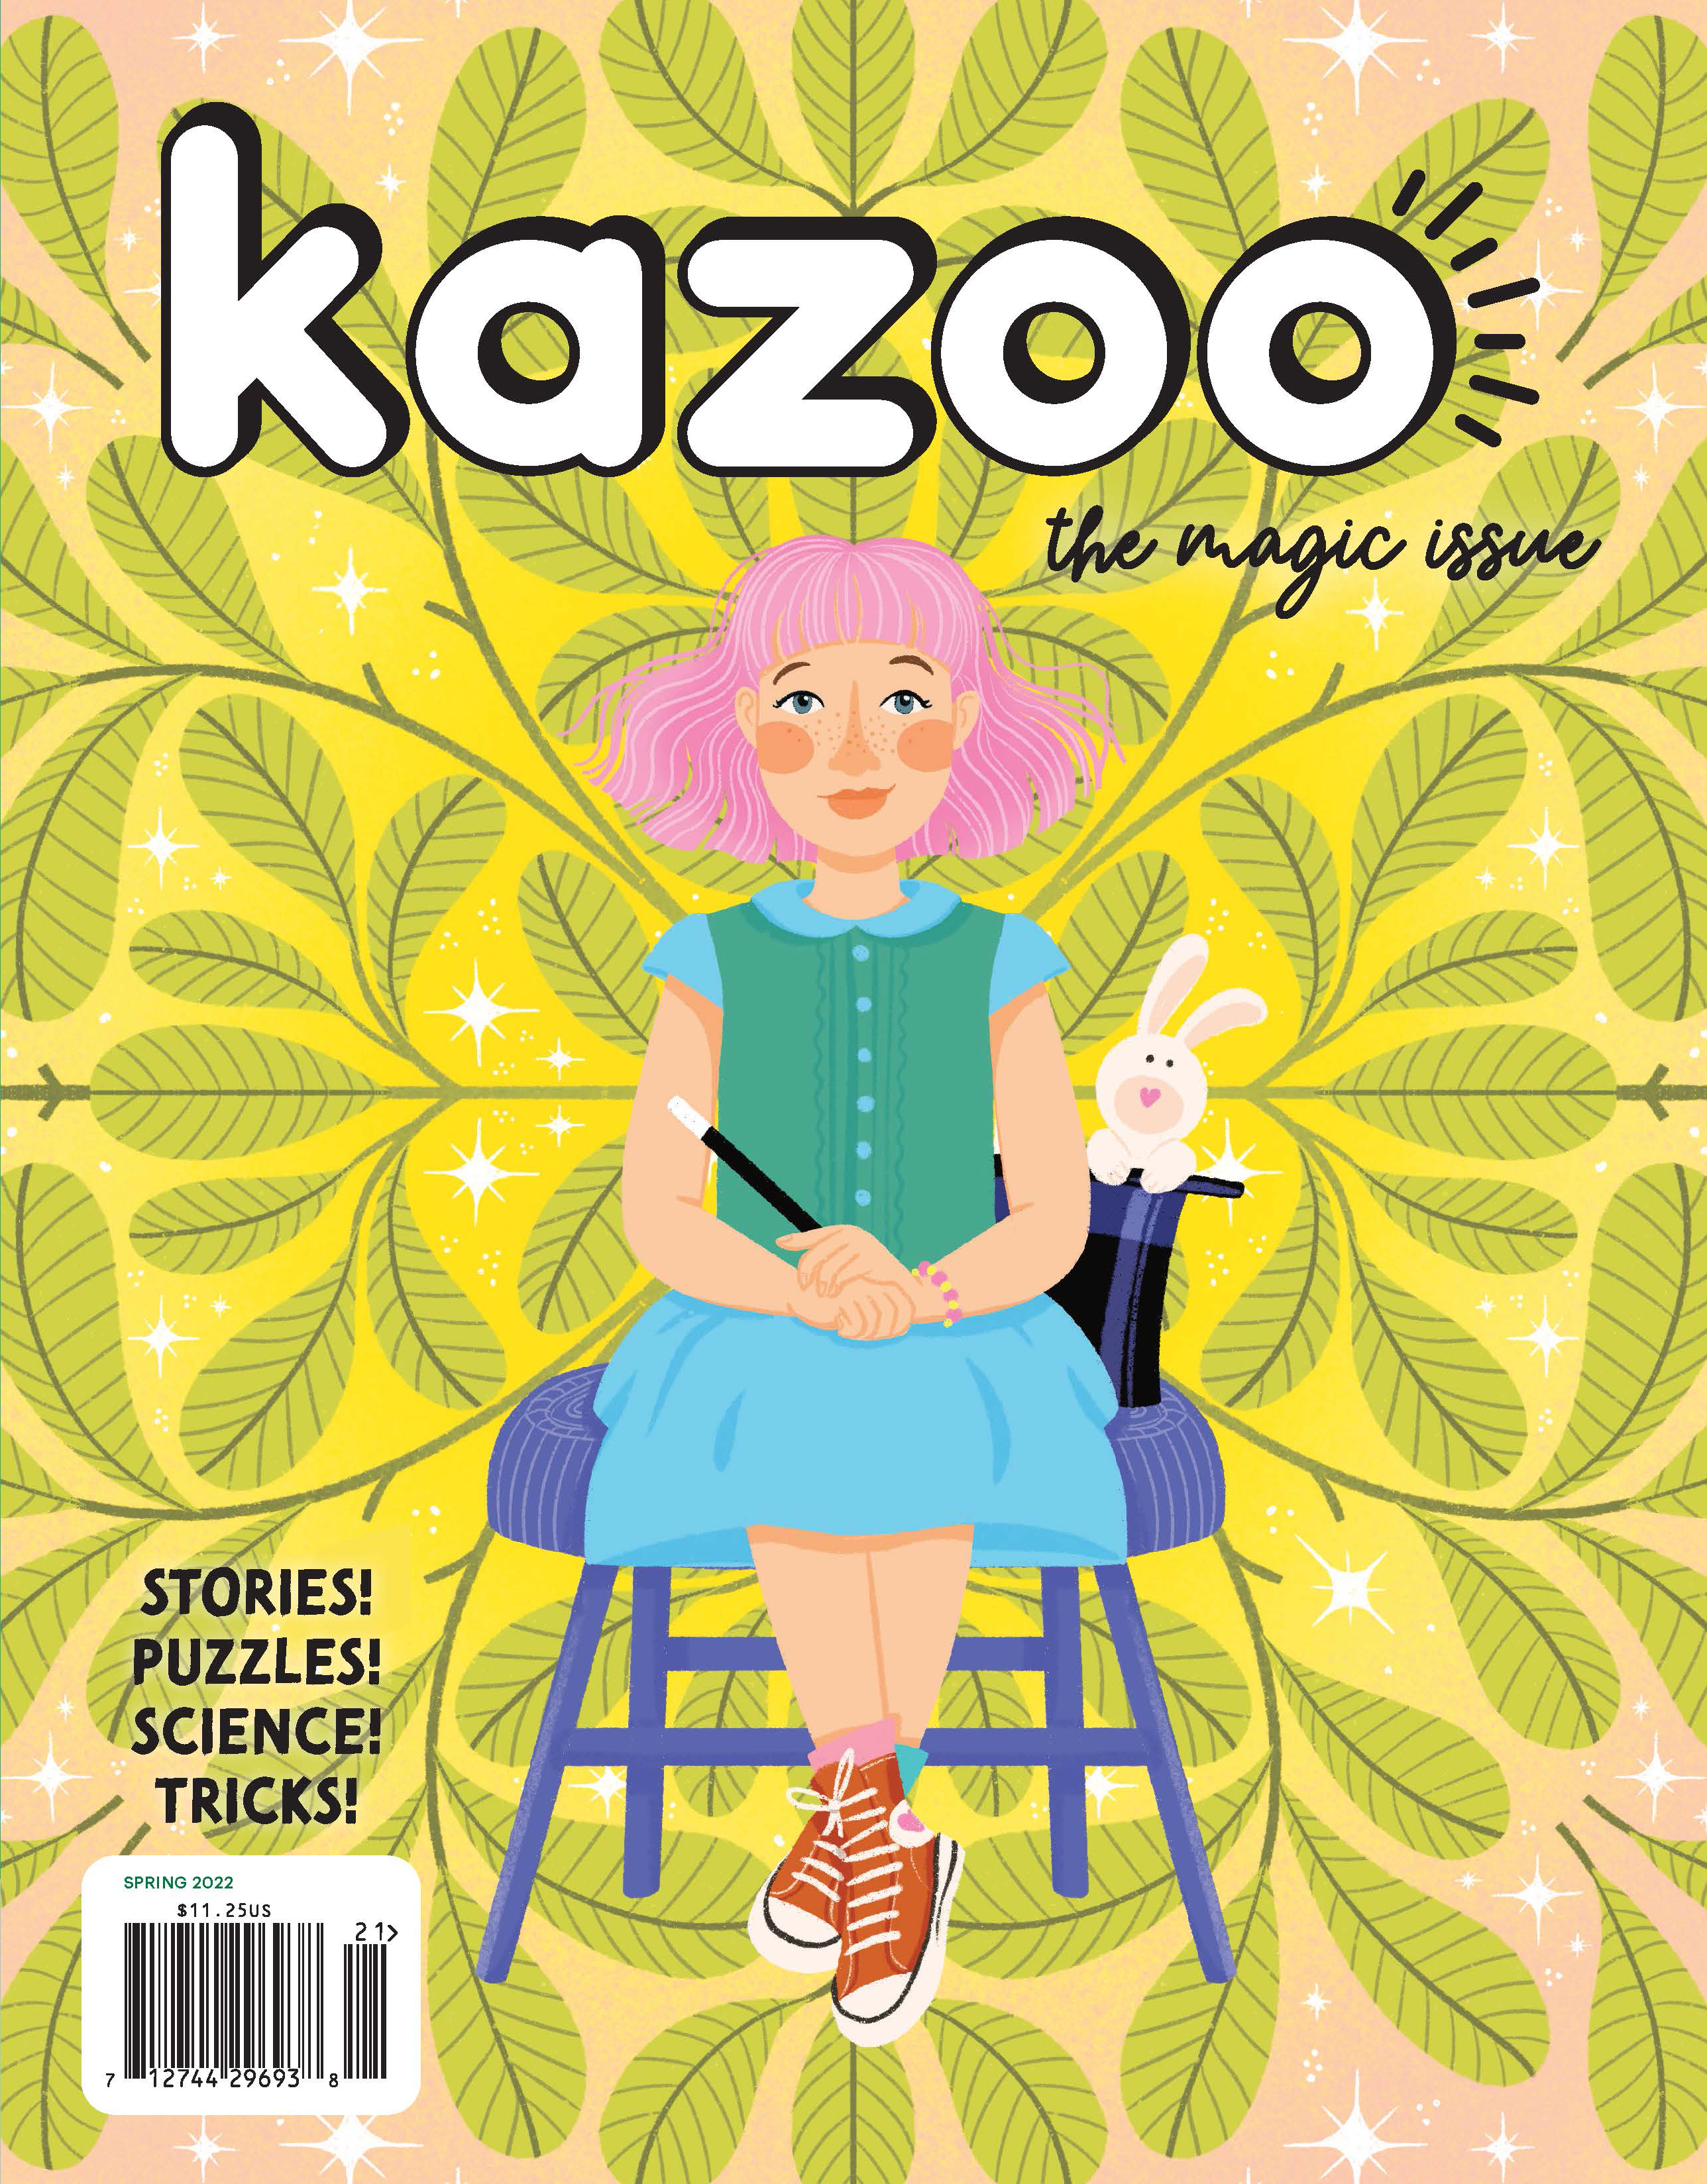 Kazoo - Wikipedia